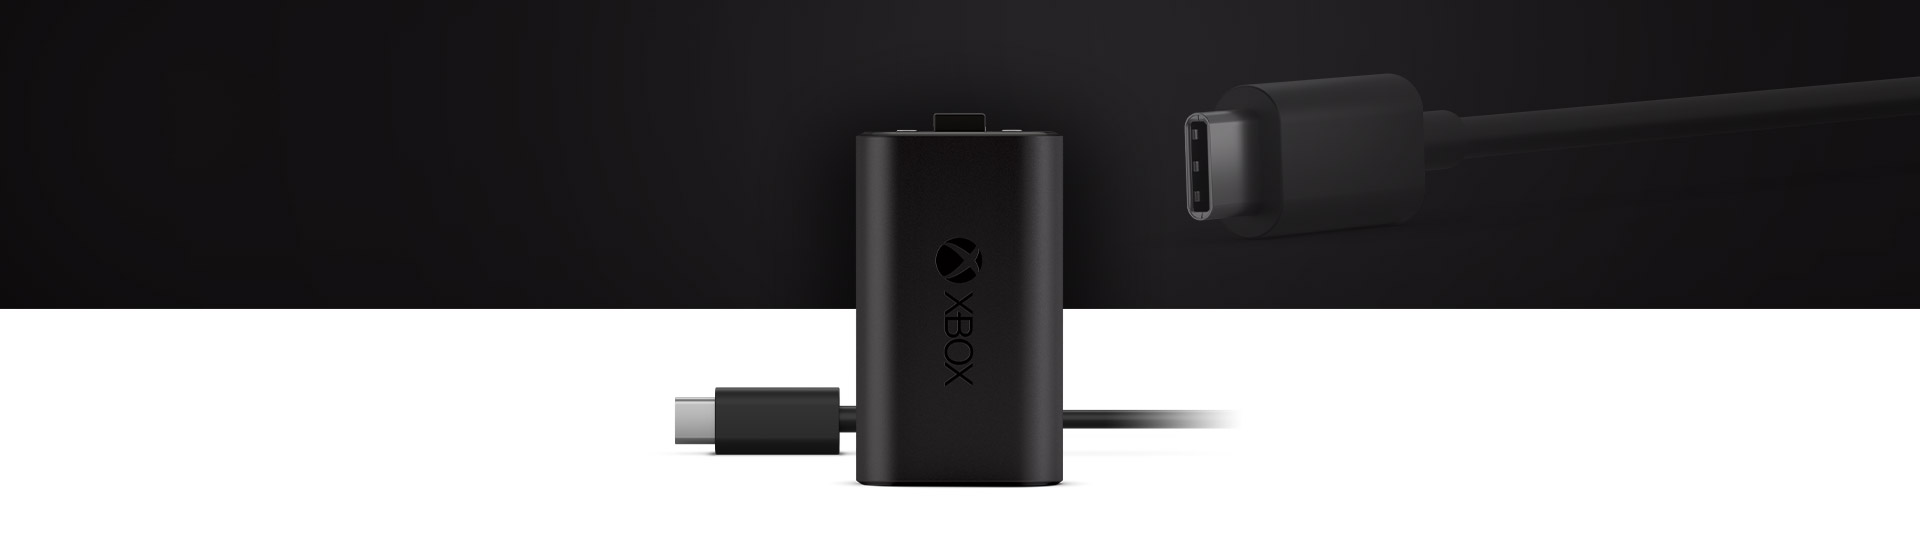 Аккумуляторная батарея Xbox и кабель USB-C®, крупный план кабеля USB-C®